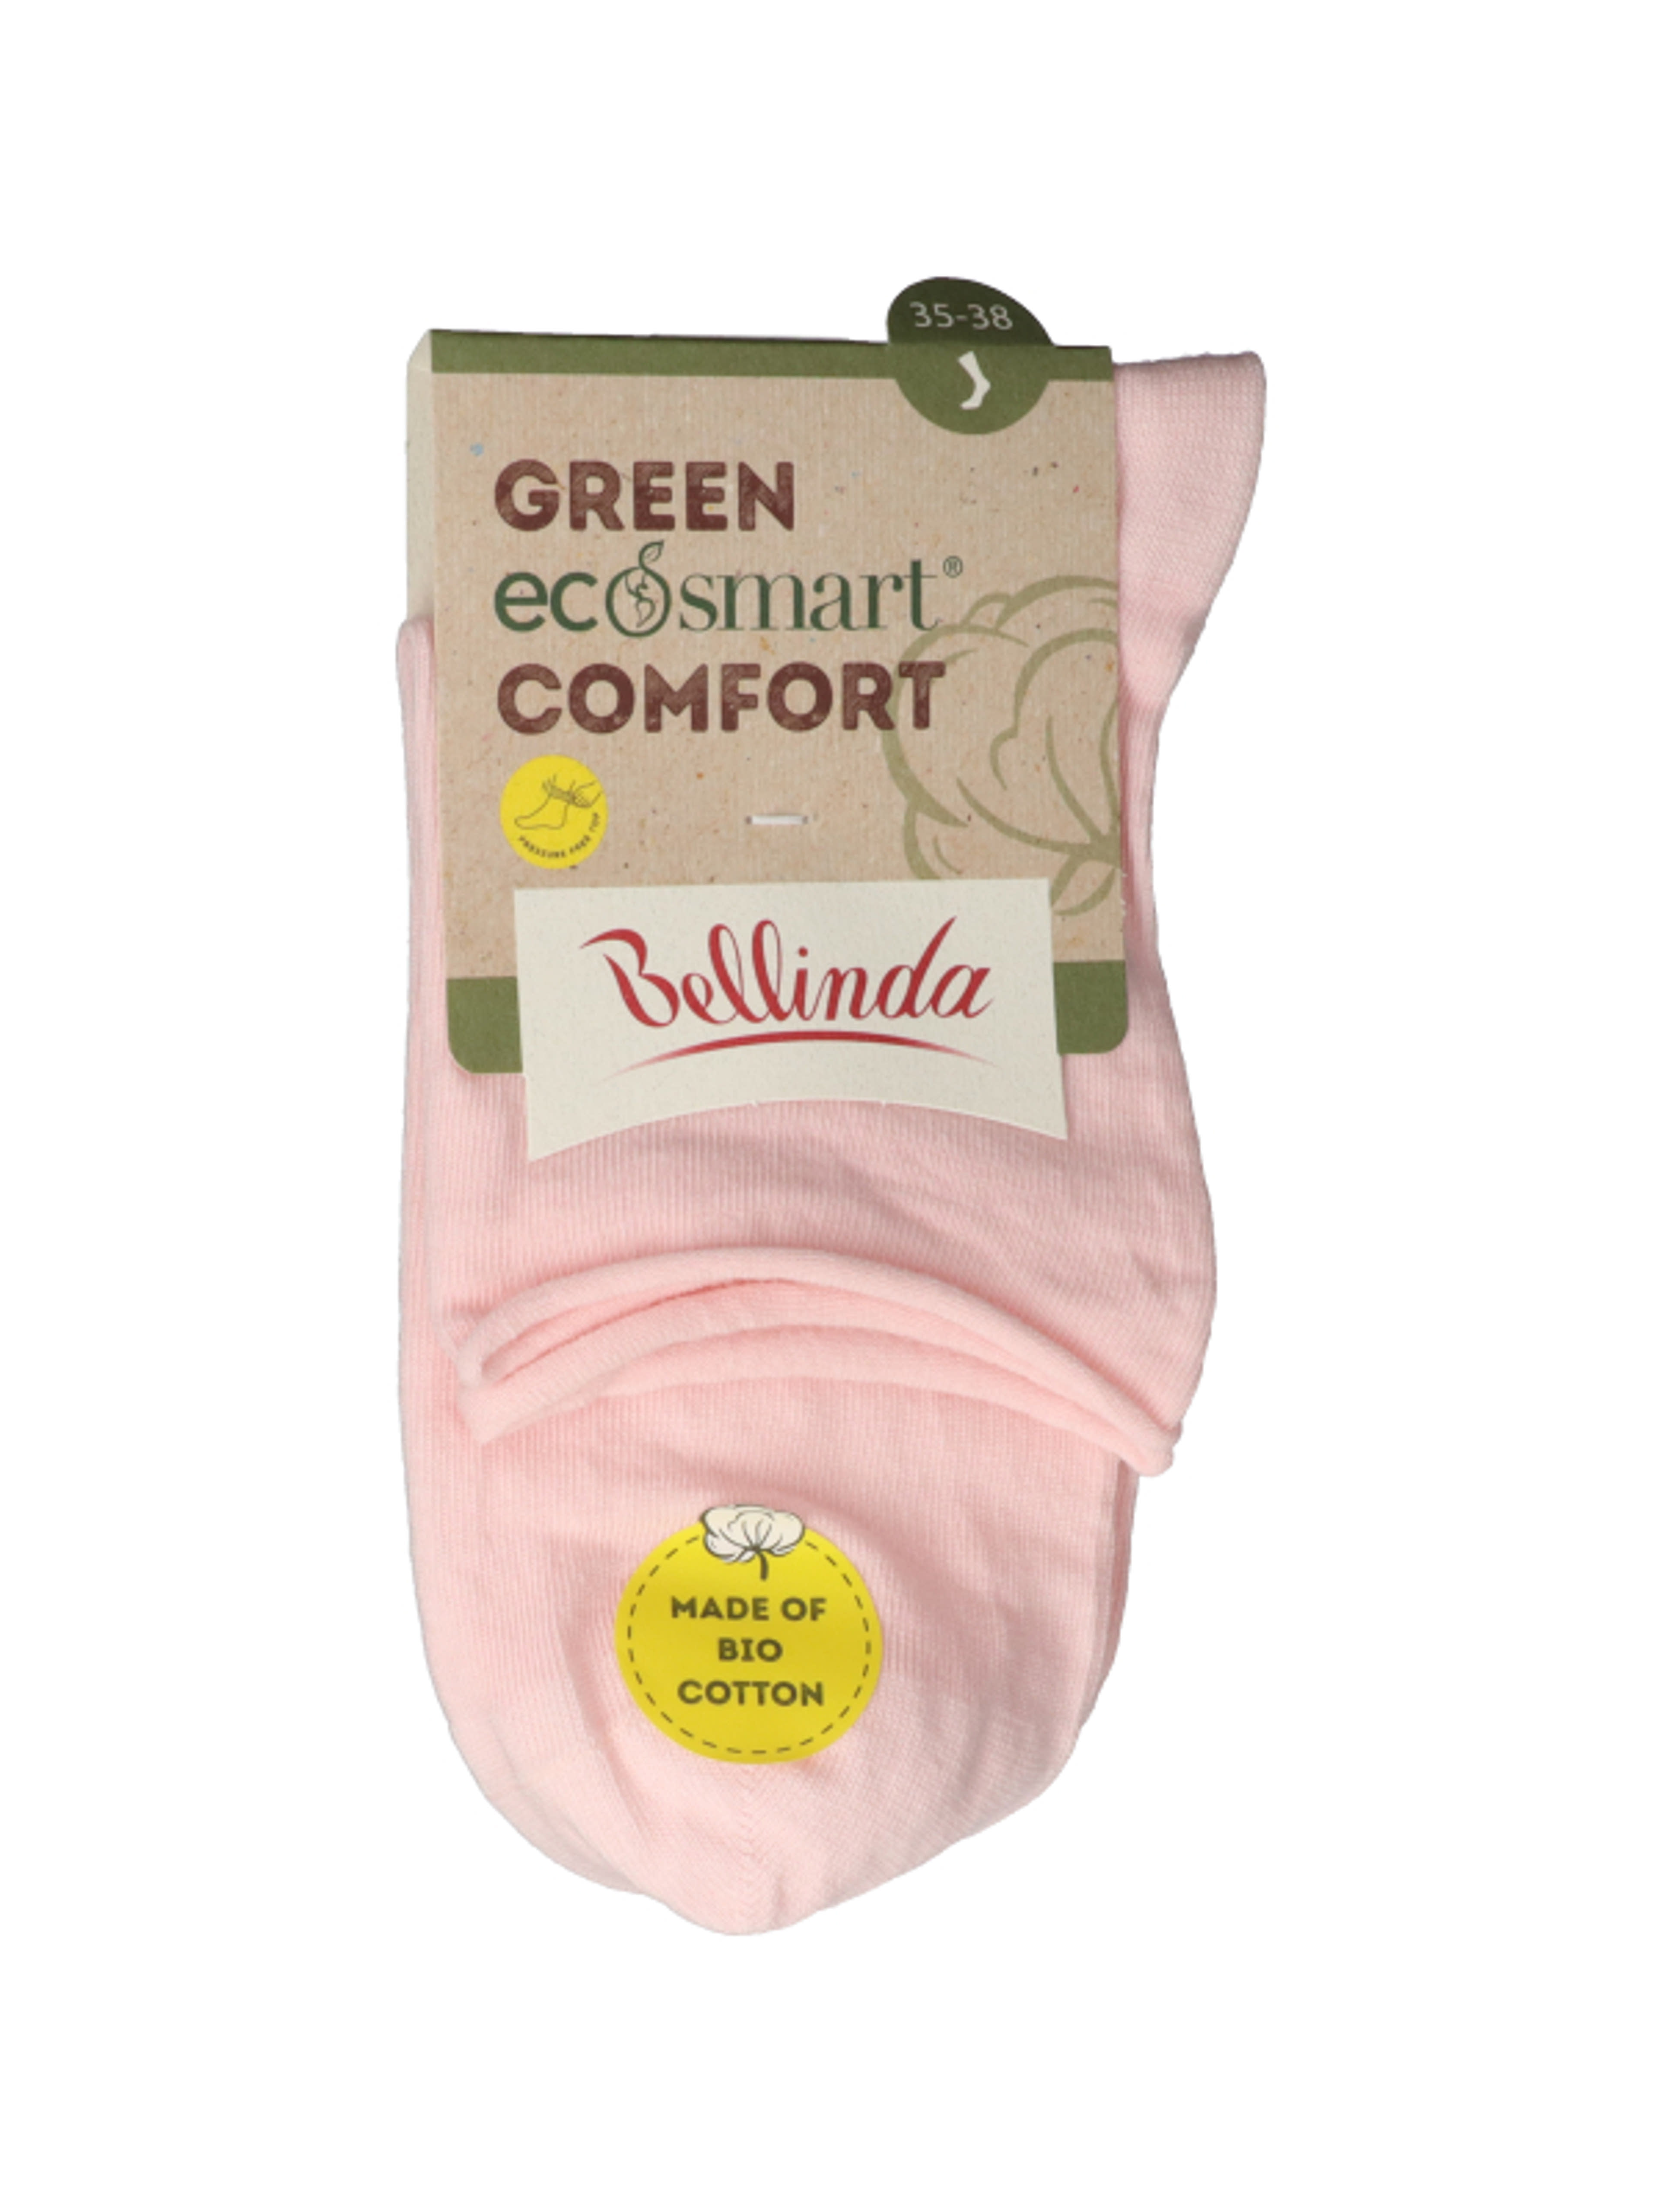 Bellinda Green Ecosmart zokni, pink 35-38 - 1 db